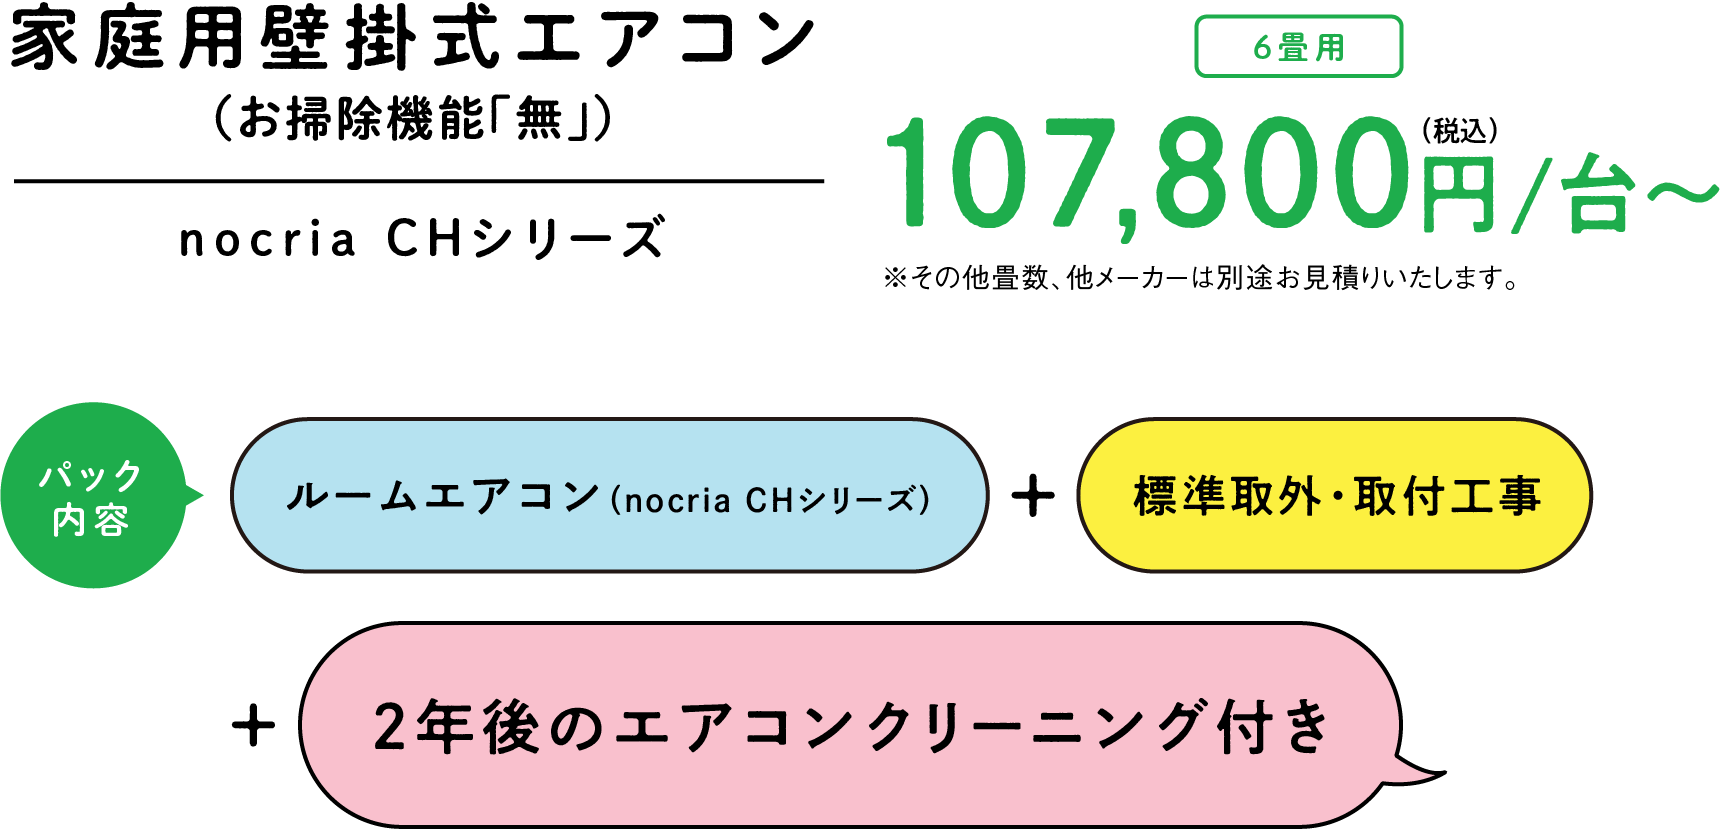 nocria CHシリーズ＋標準取付・取付工事＋2年ごのエアコンクリーニング付き